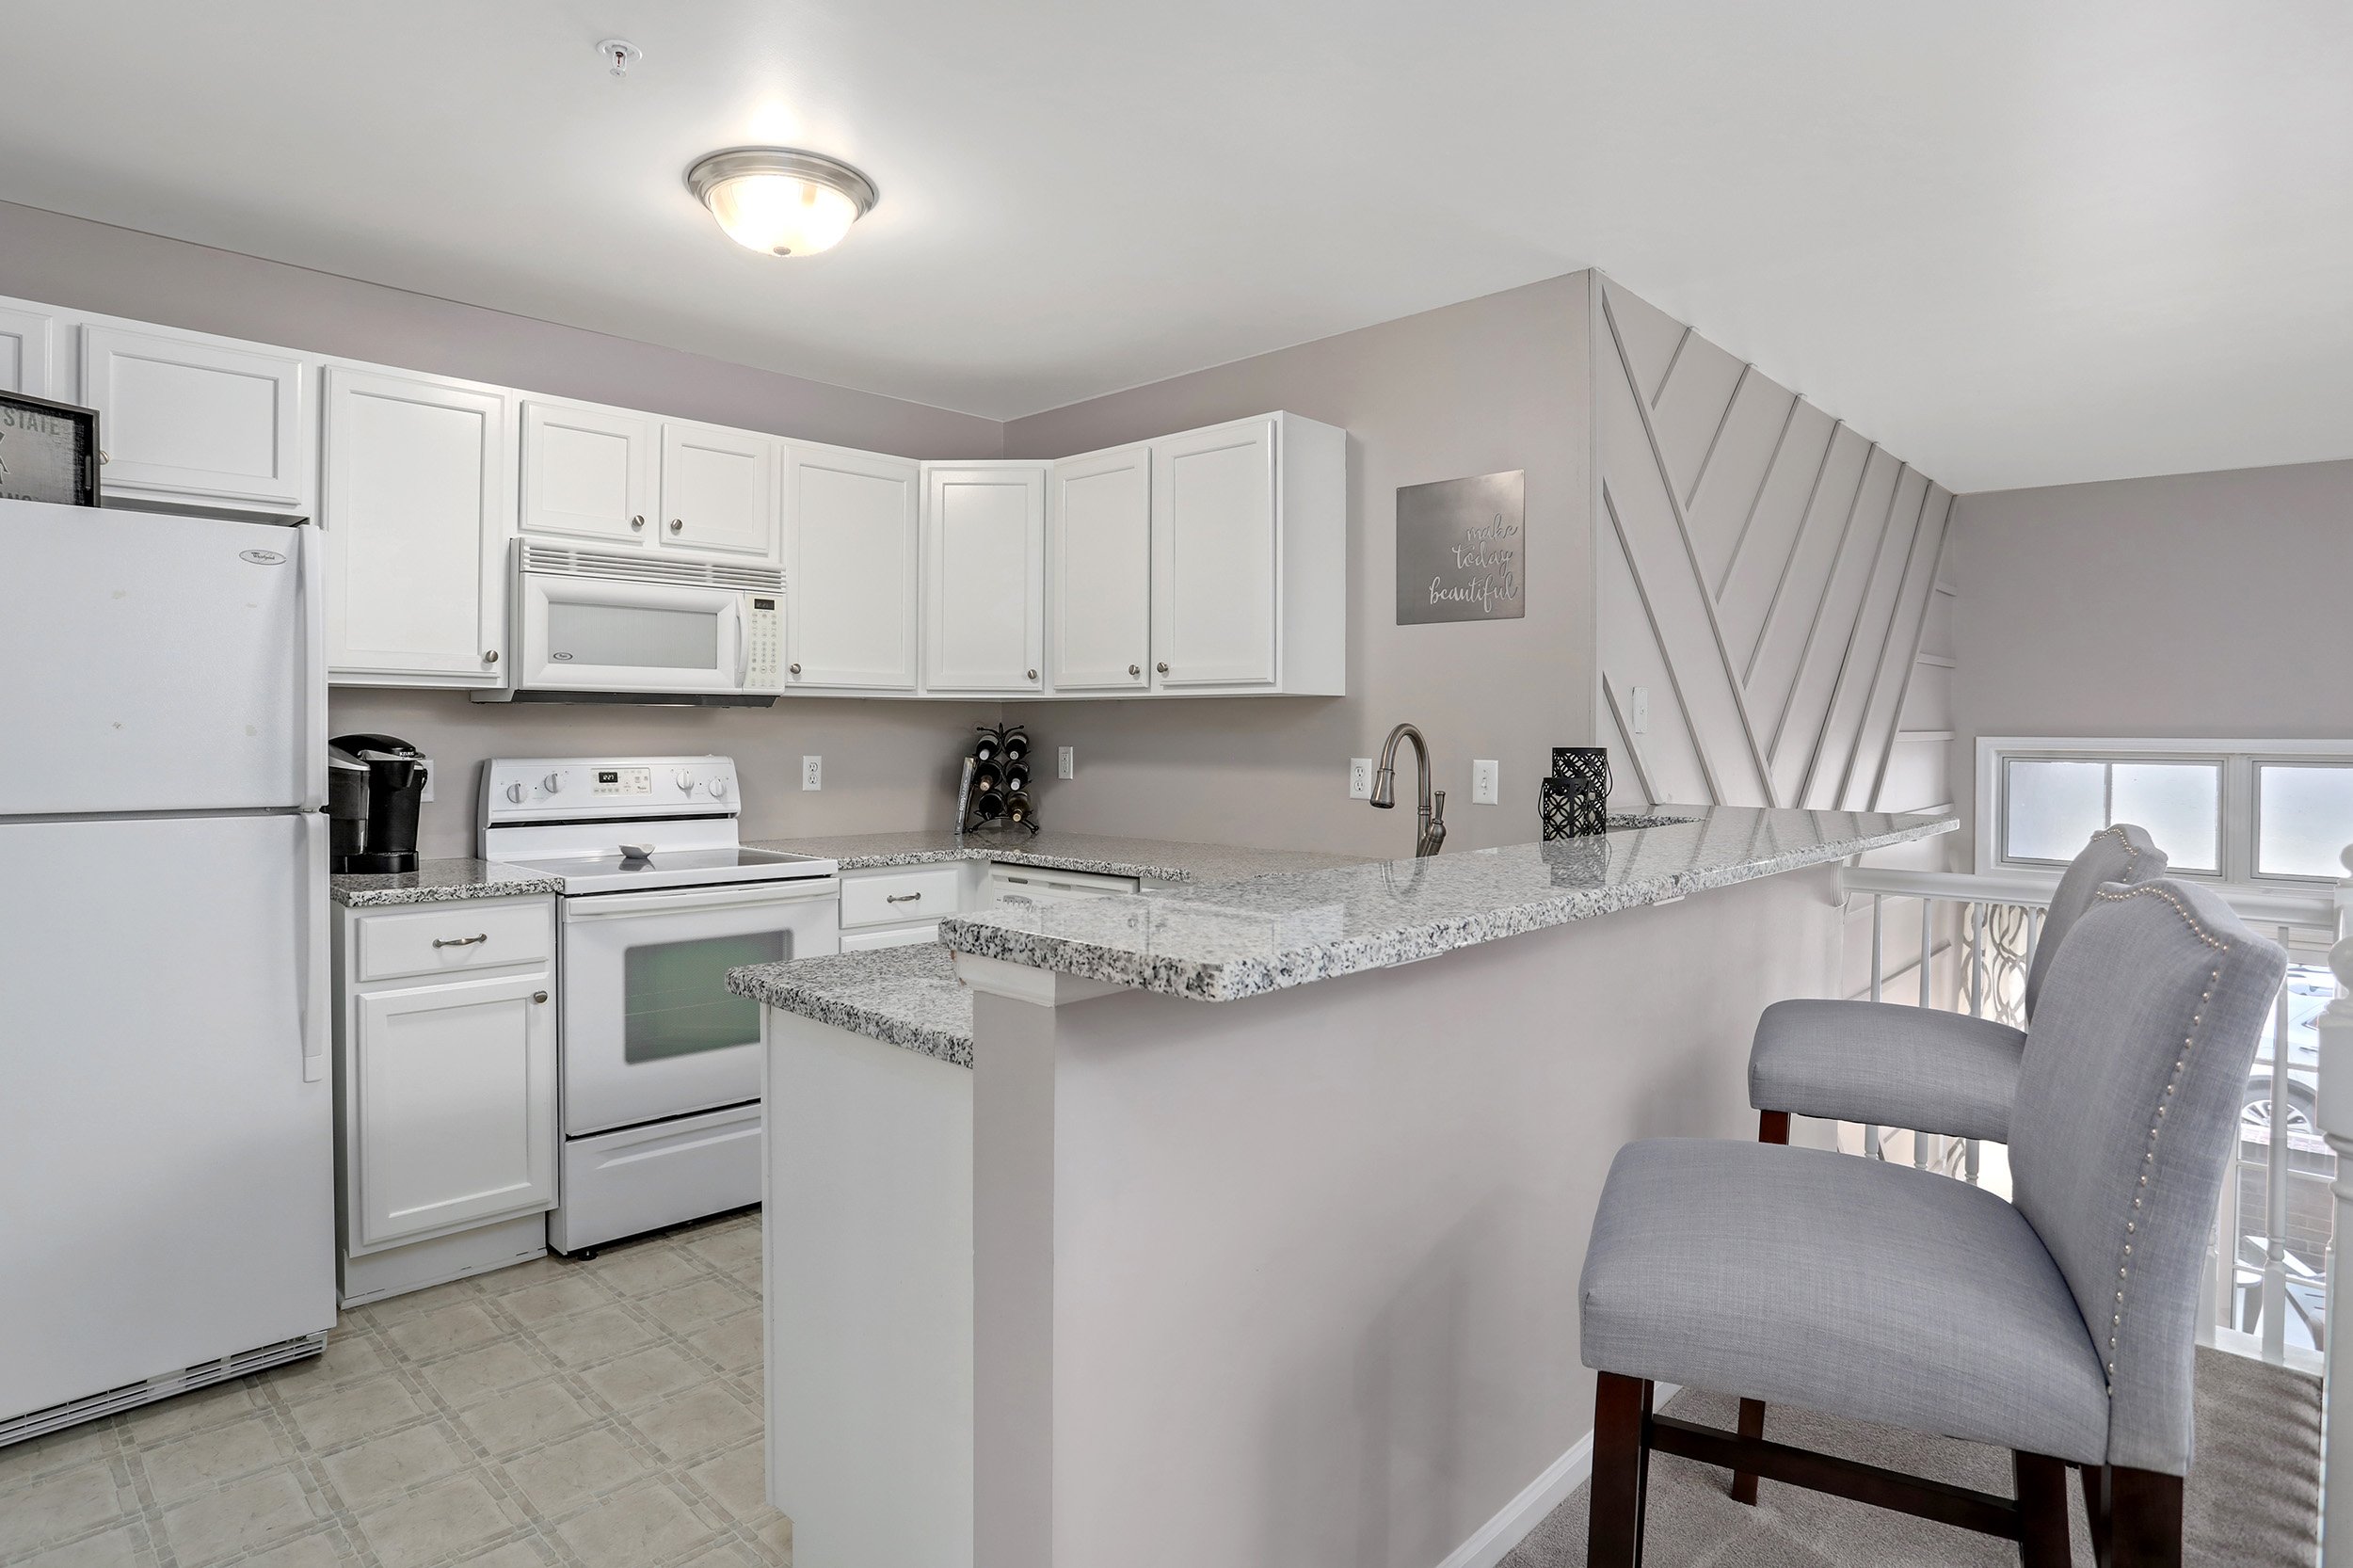  Auburn Hills Real Estate Photography - kitchen 